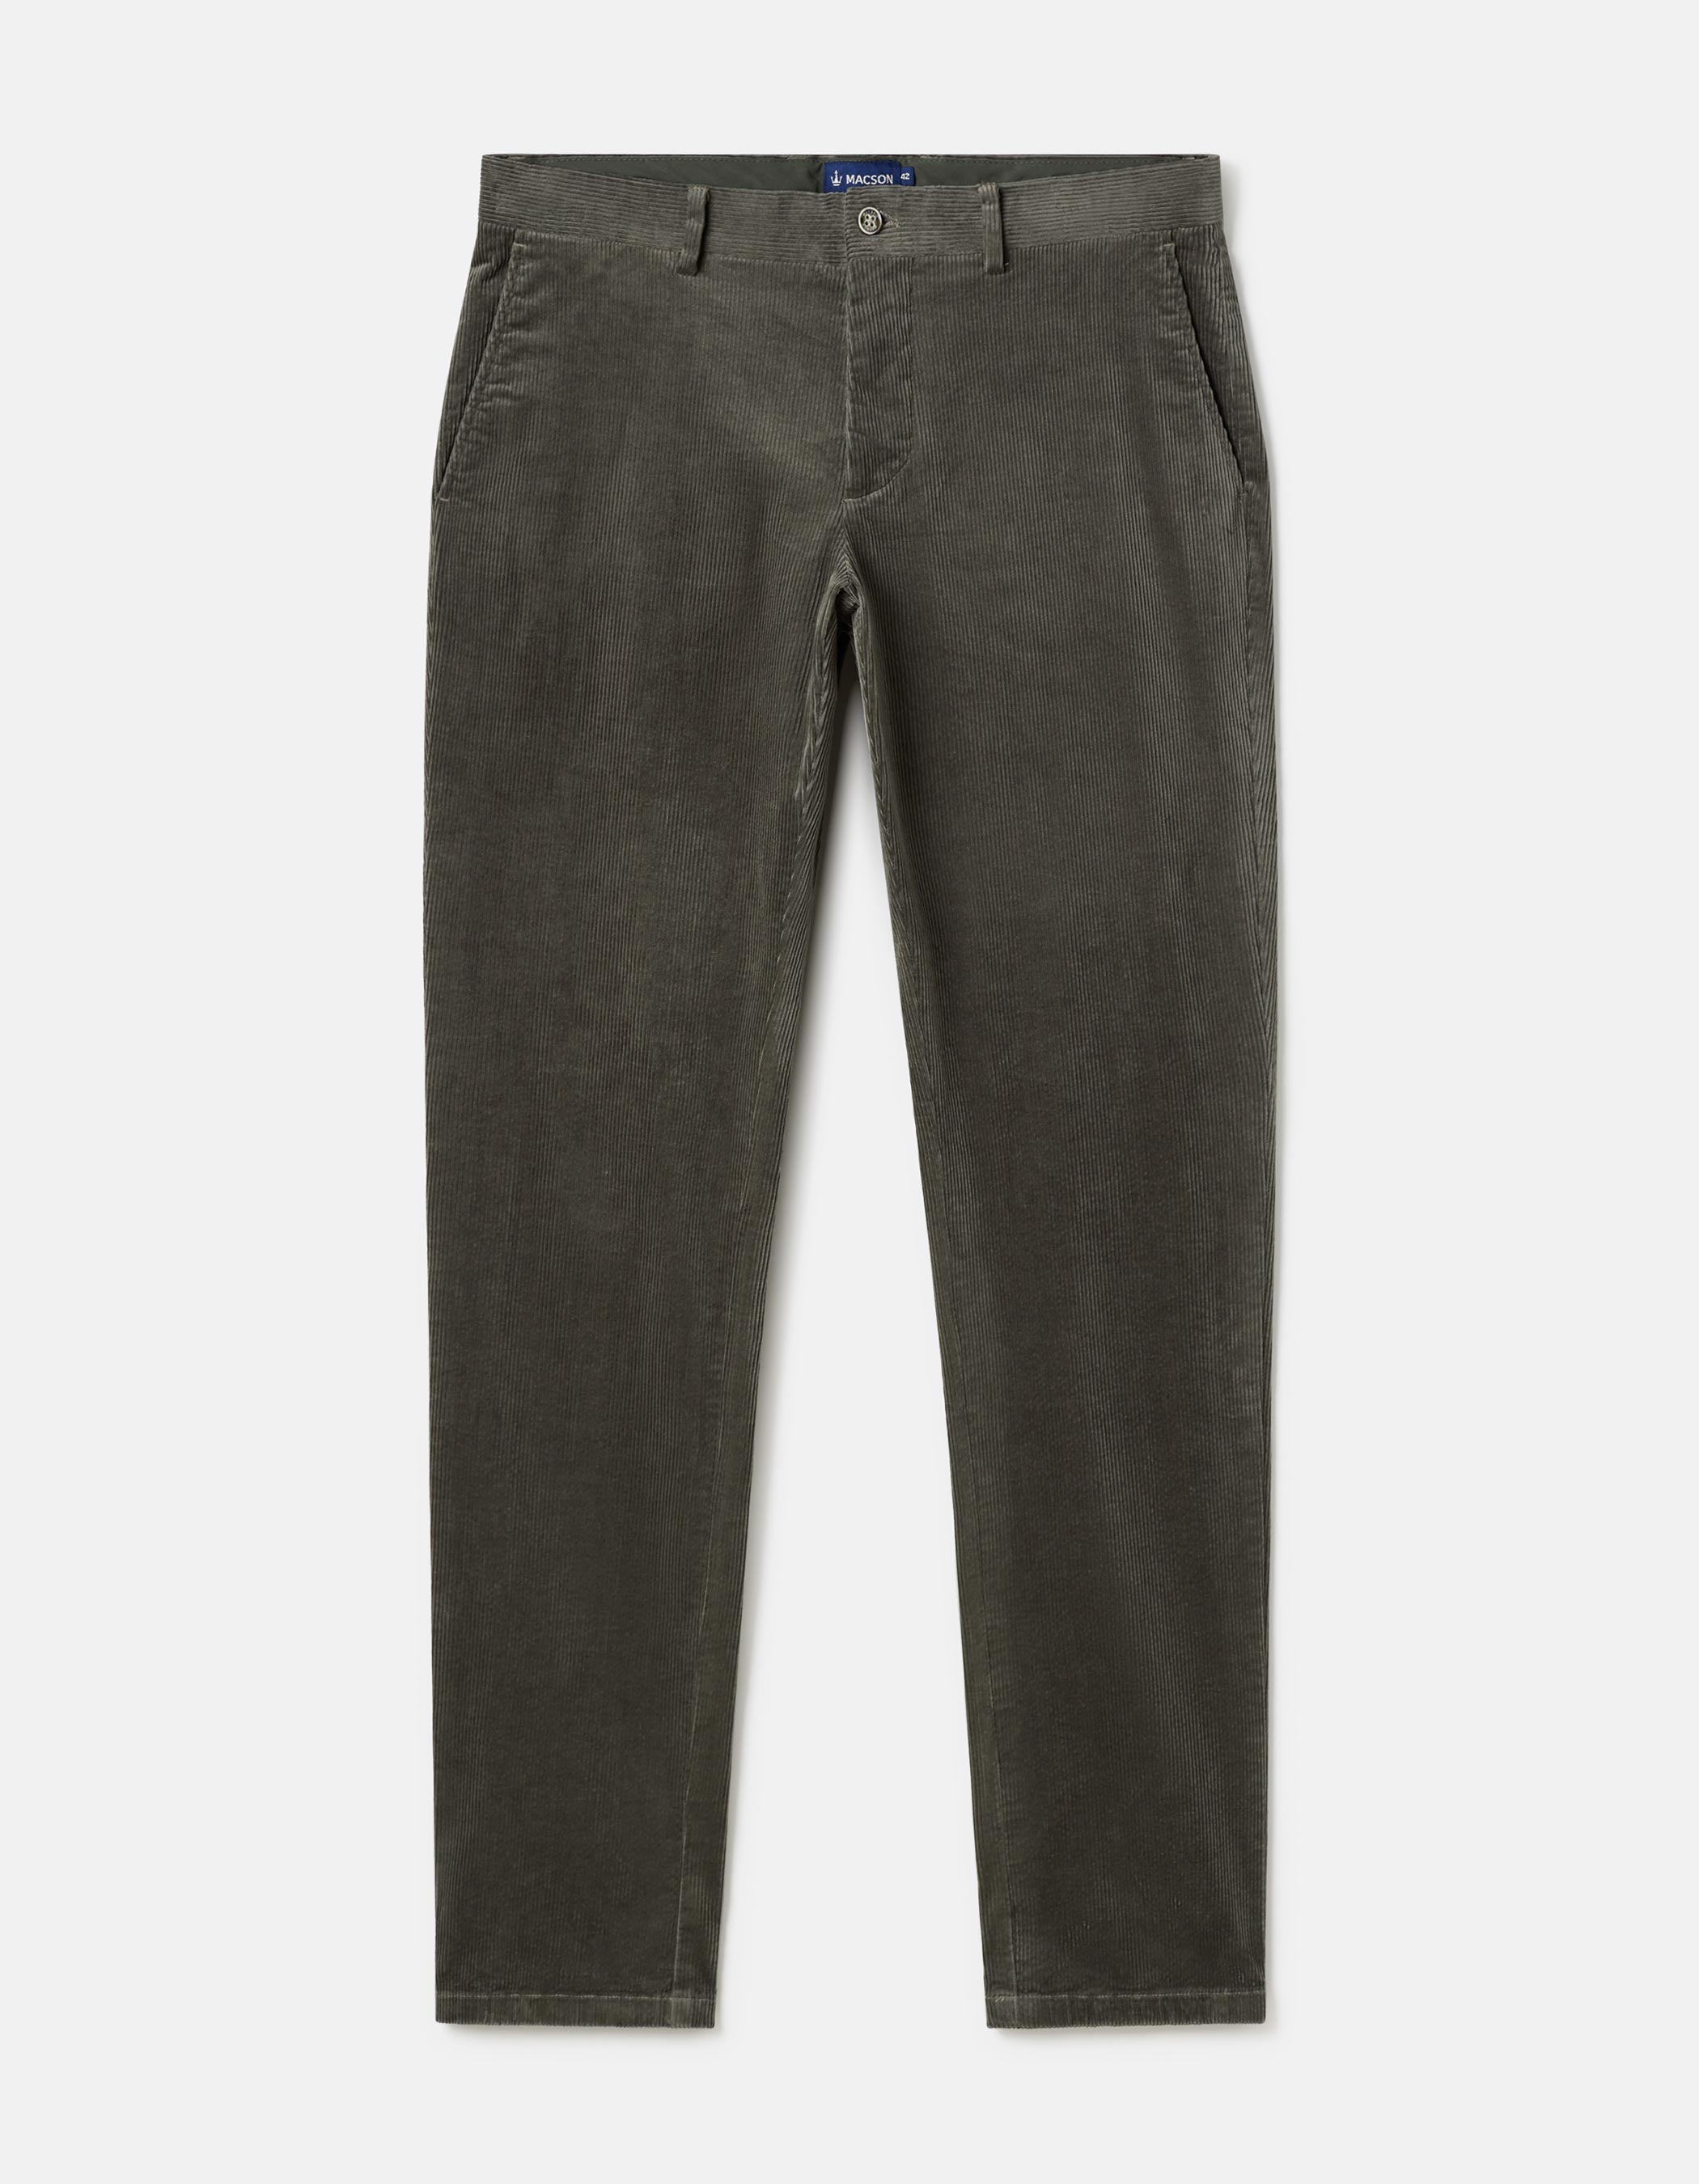 Regular fit cotton corduroy trousers